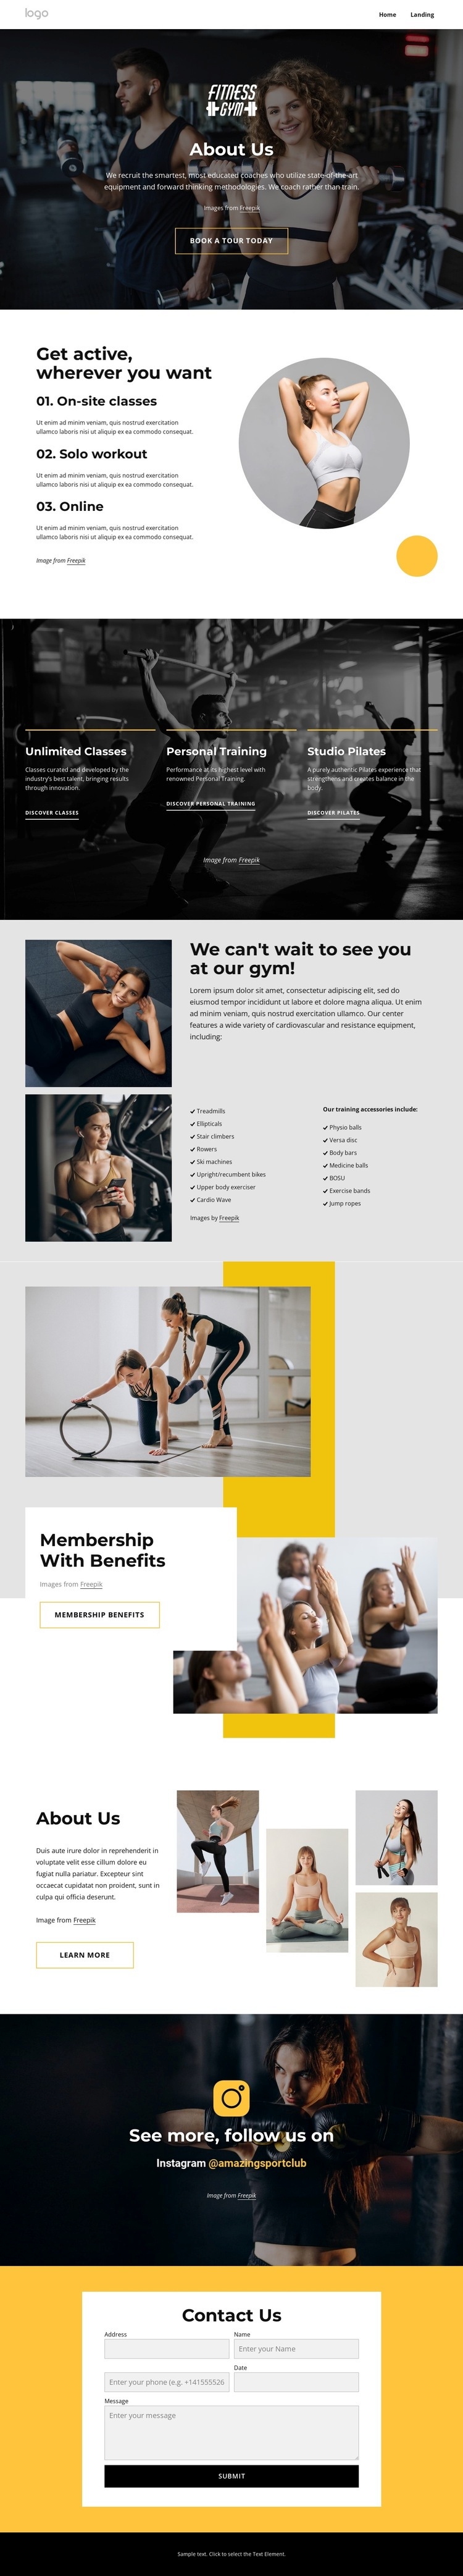 Sport and wellness center Homepage Design